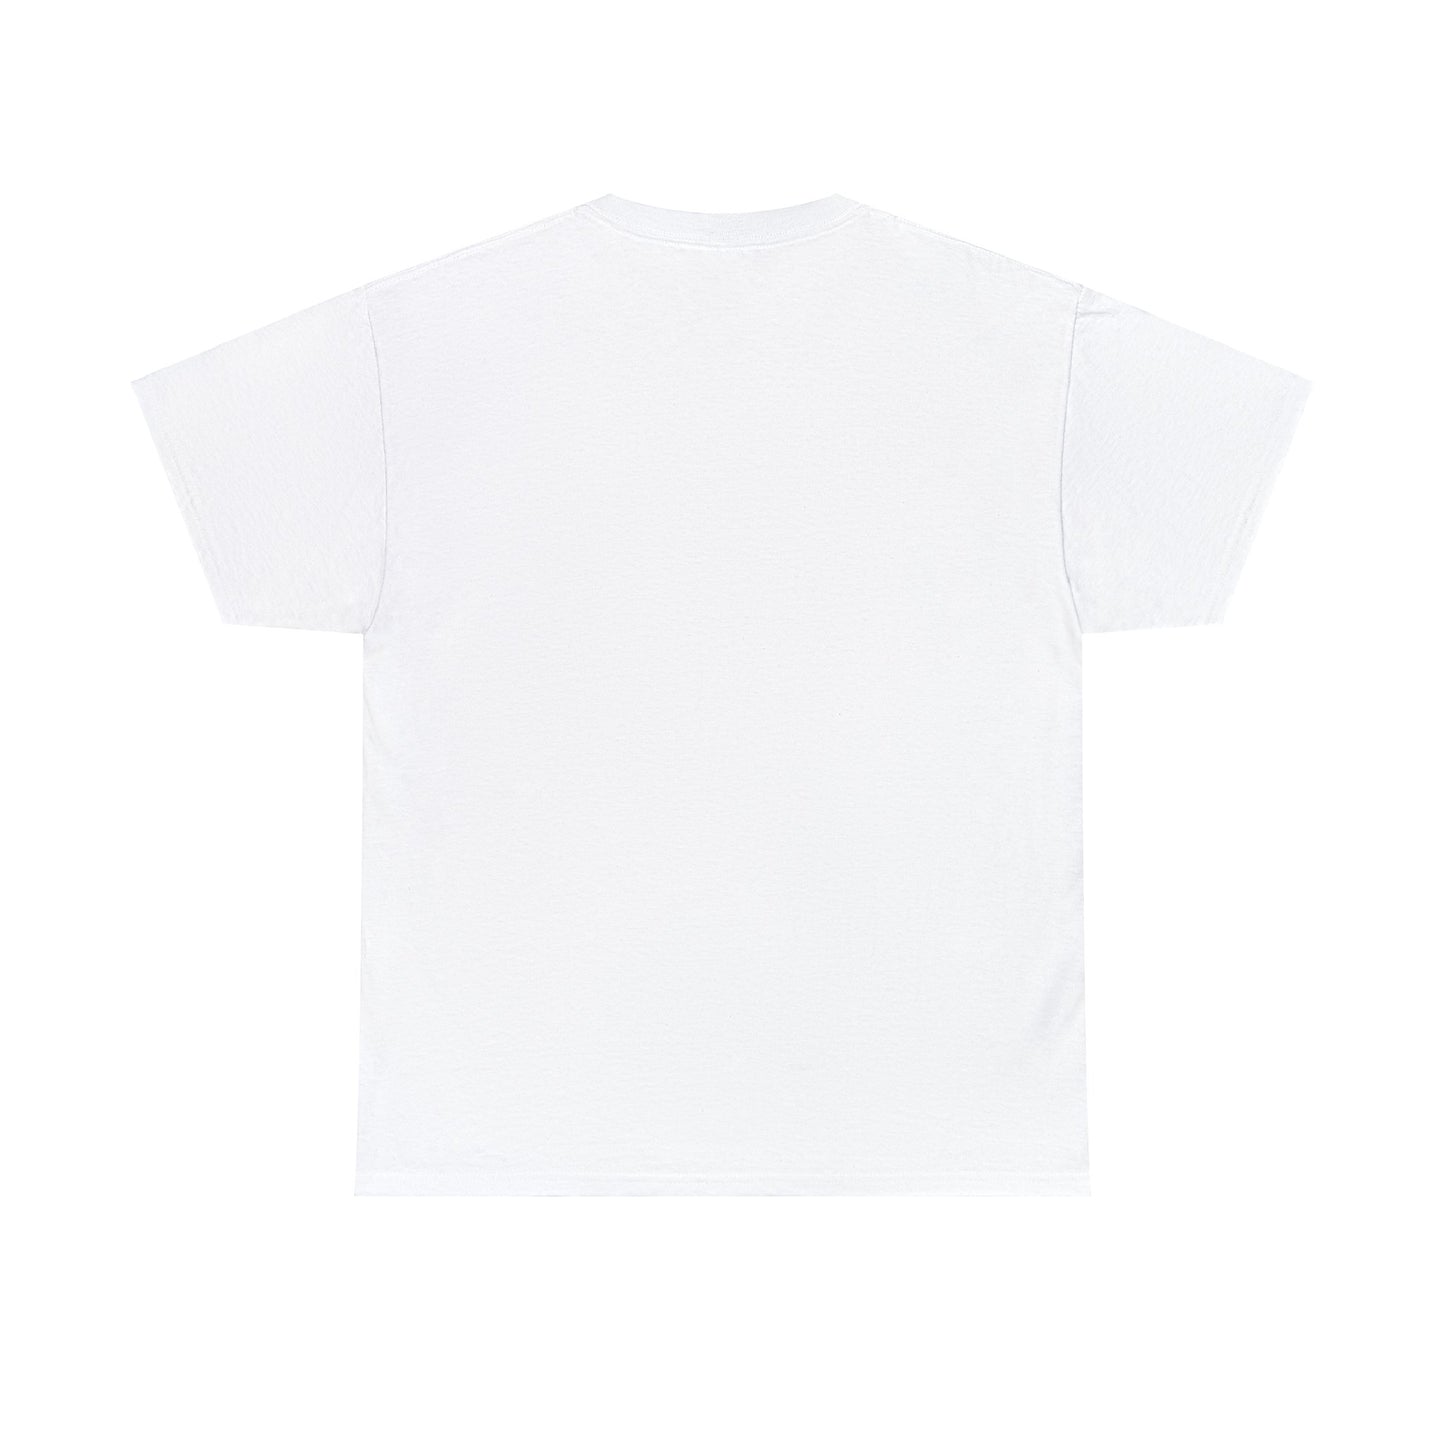 White T-Shirt • თეთრი მაისური (UNISEX)